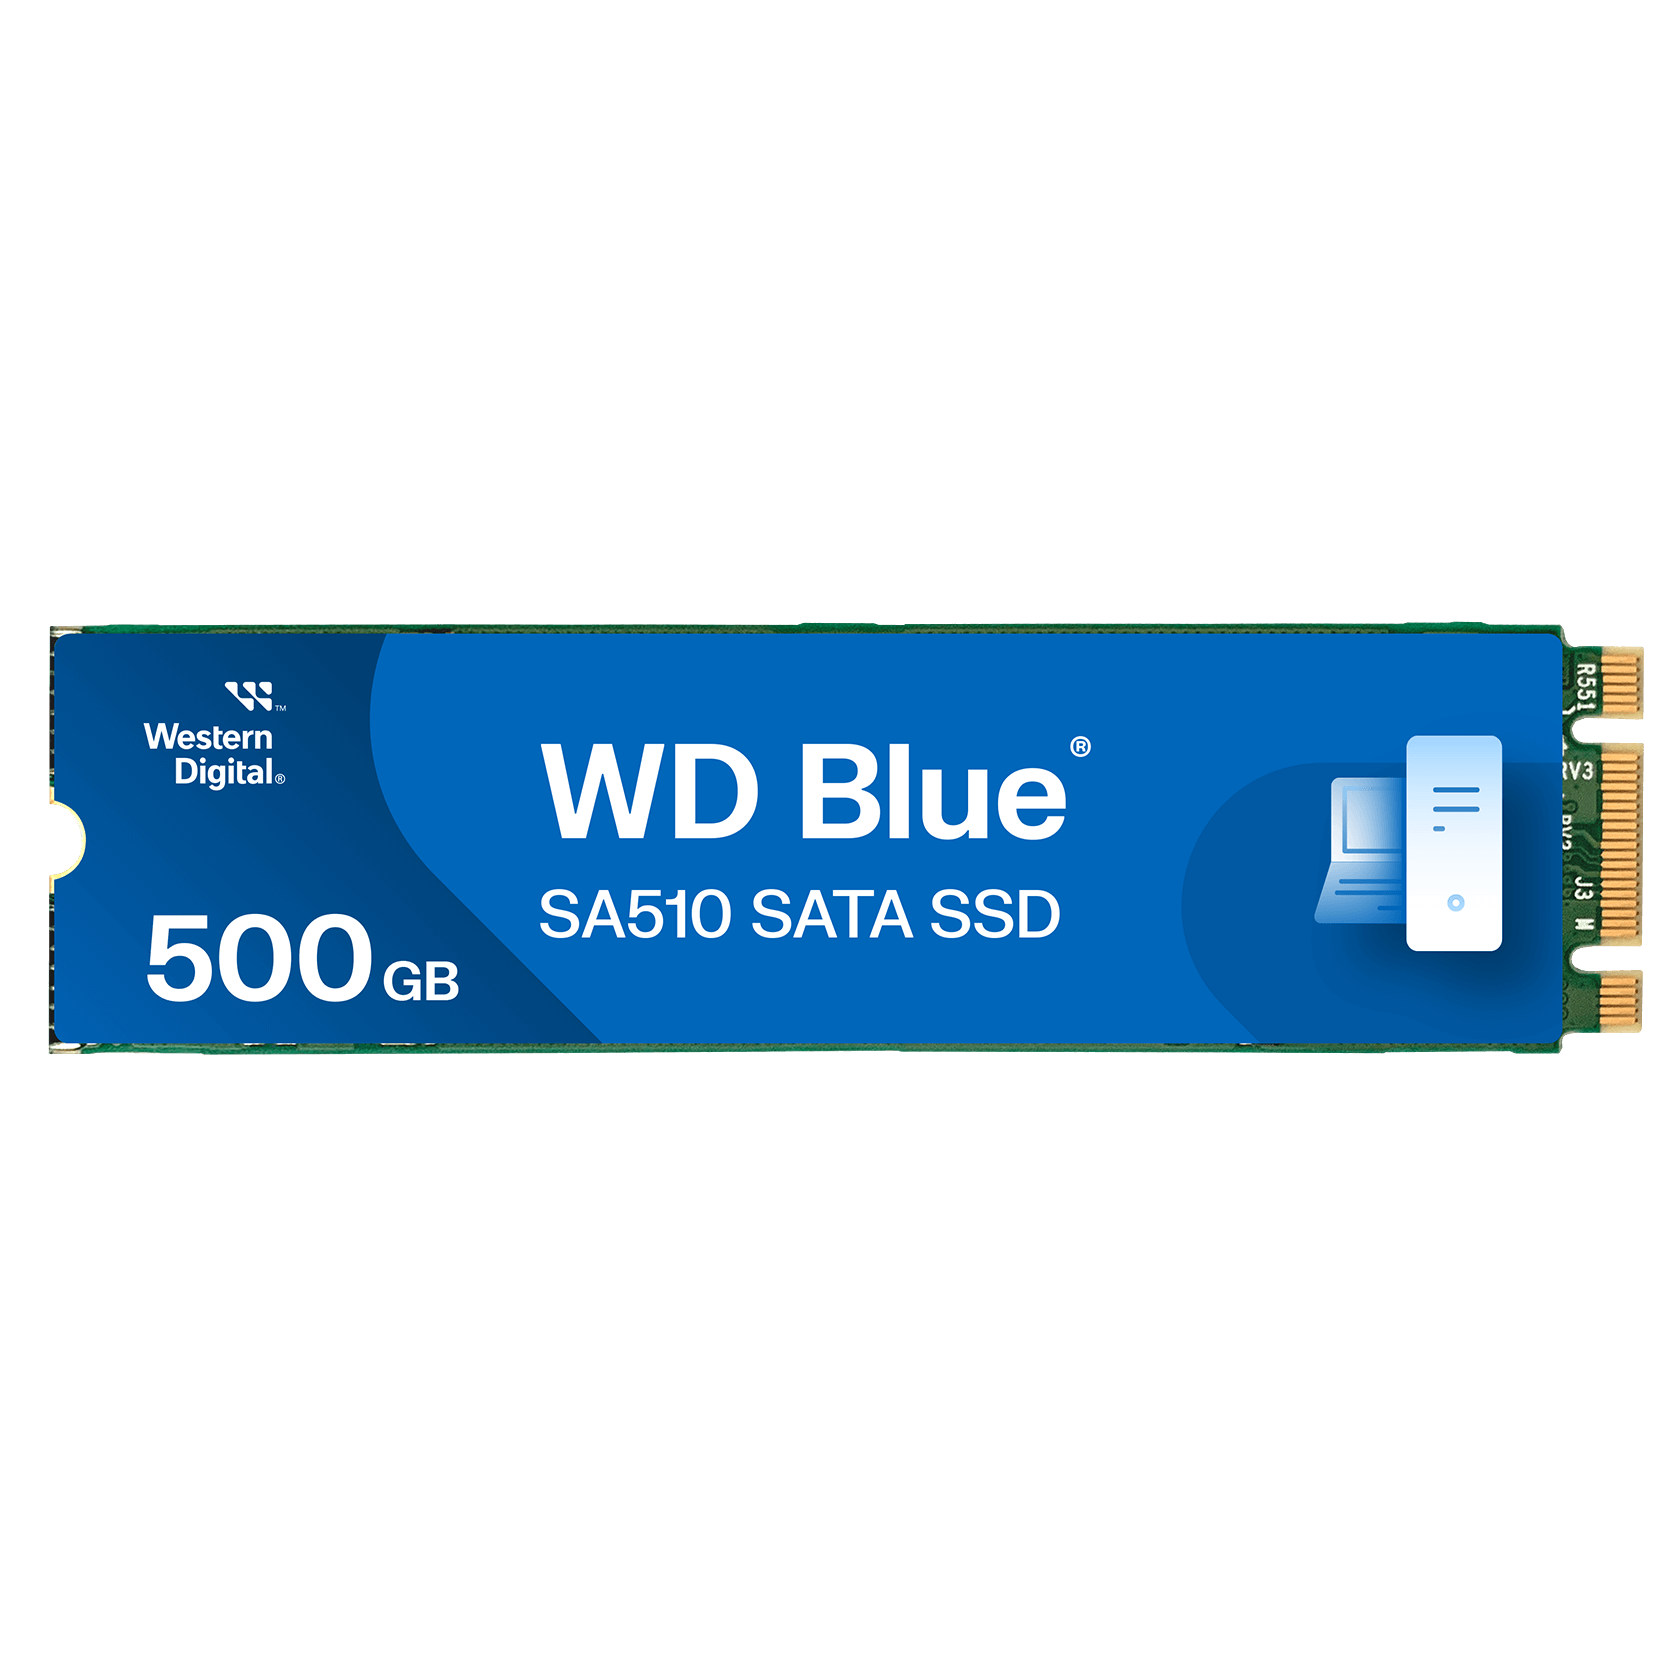 Western Digital WD Blue™ SA510 SATA - 500GB - WDS500G3B0B